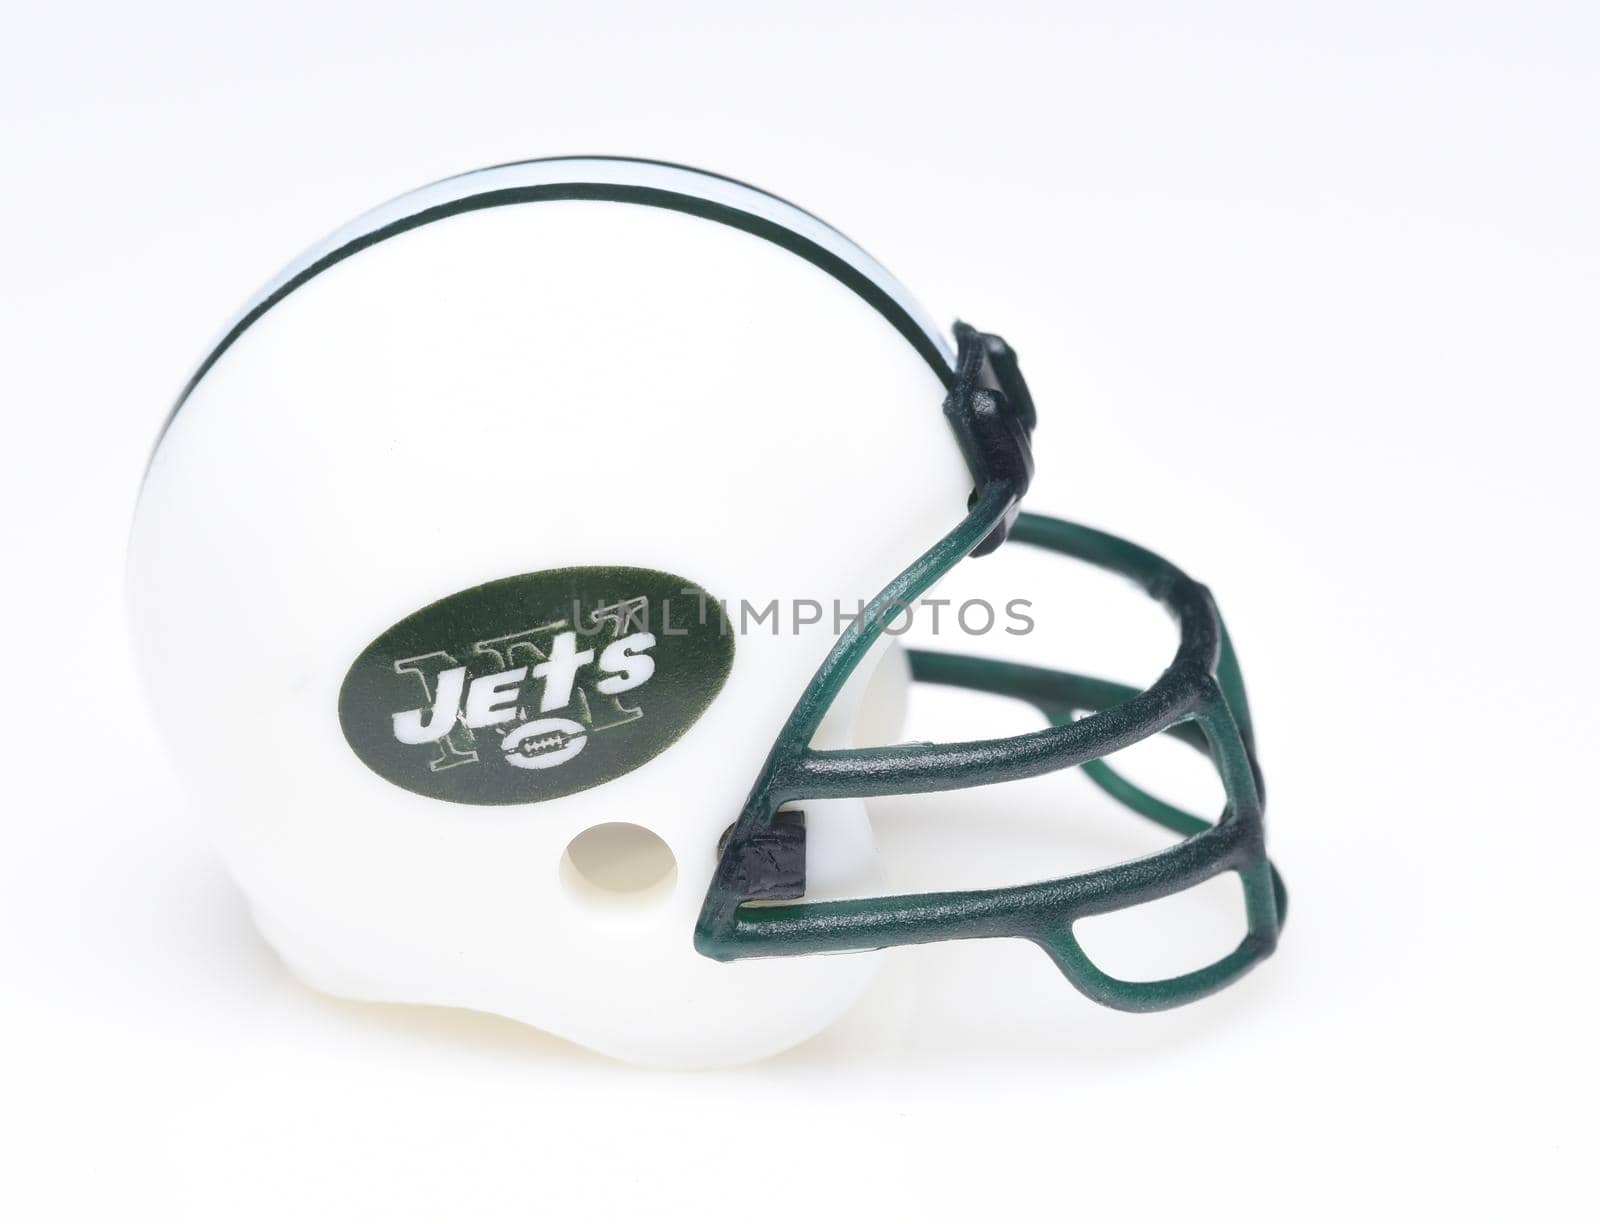 Football Helmet for the New York Jets by sCukrov